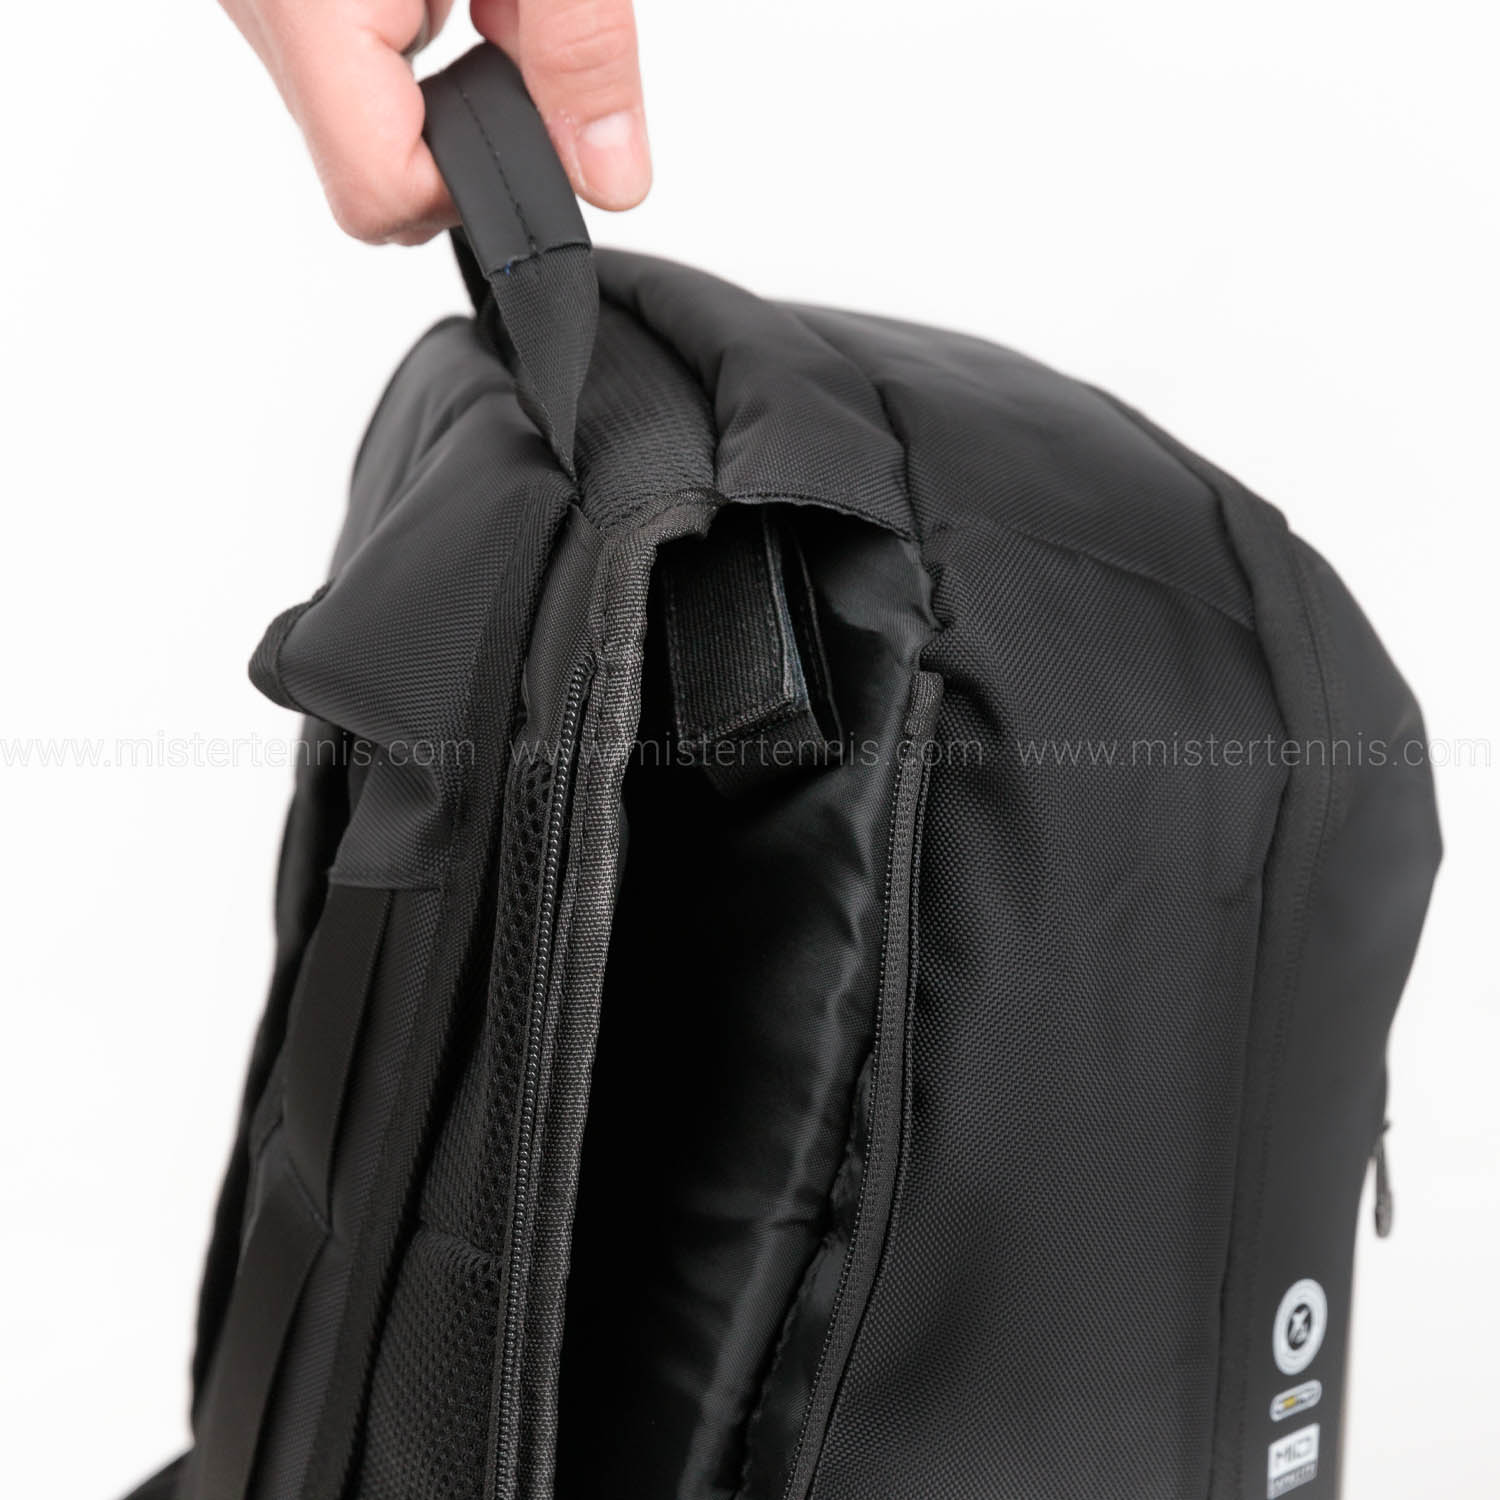 Drop Shot Alsai Campa Backpack - Black